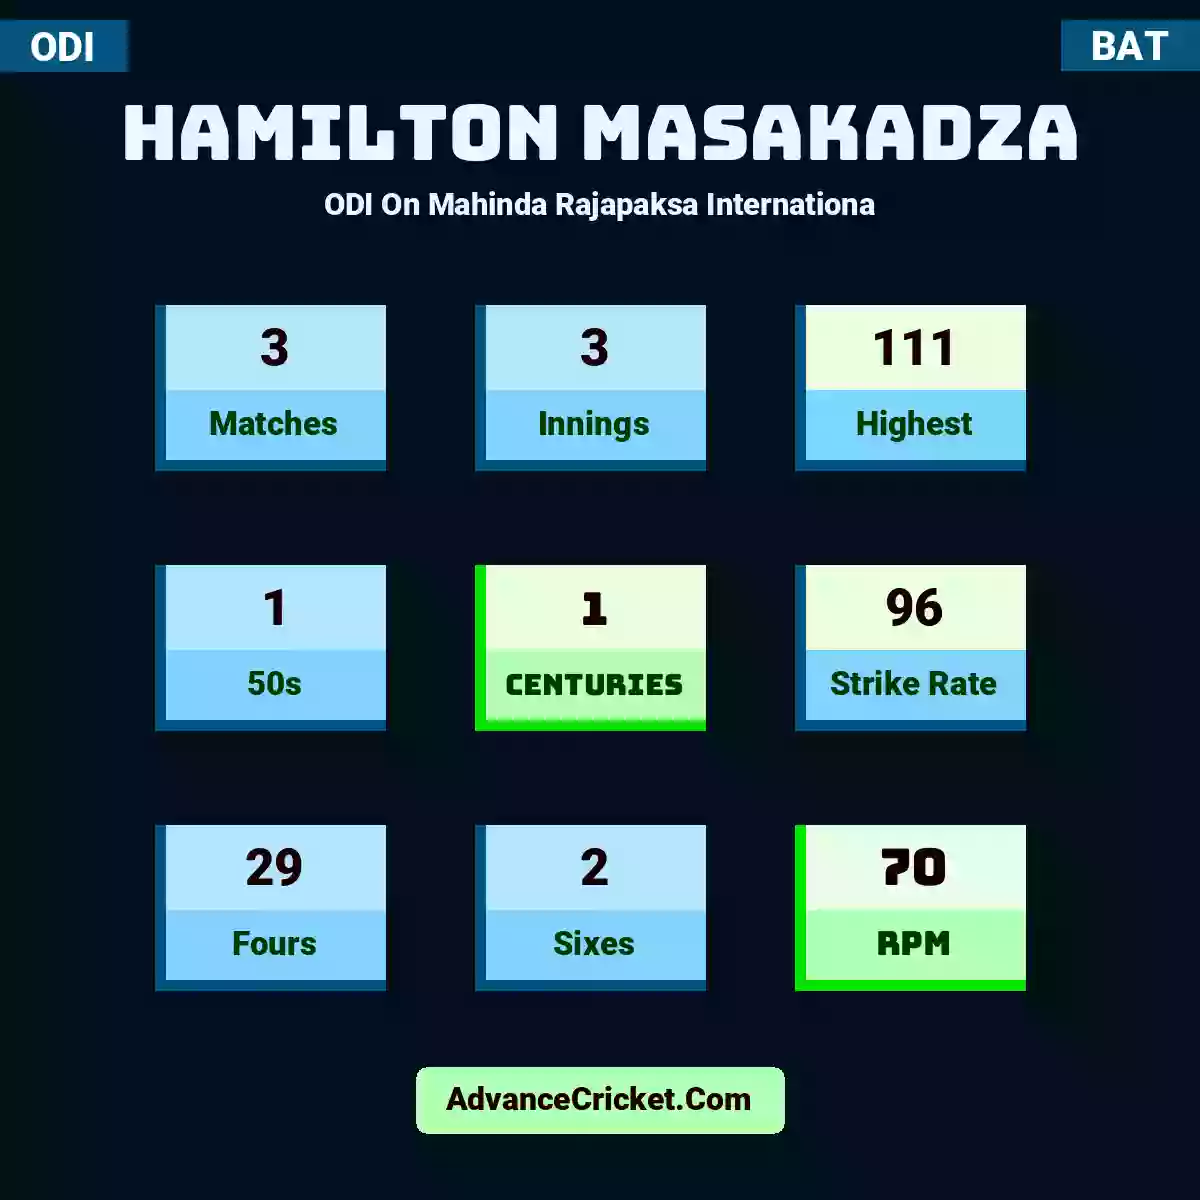 Hamilton Masakadza ODI  On Mahinda Rajapaksa Internationa, Hamilton Masakadza played 3 matches, scored 111 runs as highest, 1 half-centuries, and 1 centuries, with a strike rate of 96. H.Masakadza hit 29 fours and 2 sixes, with an RPM of 70.